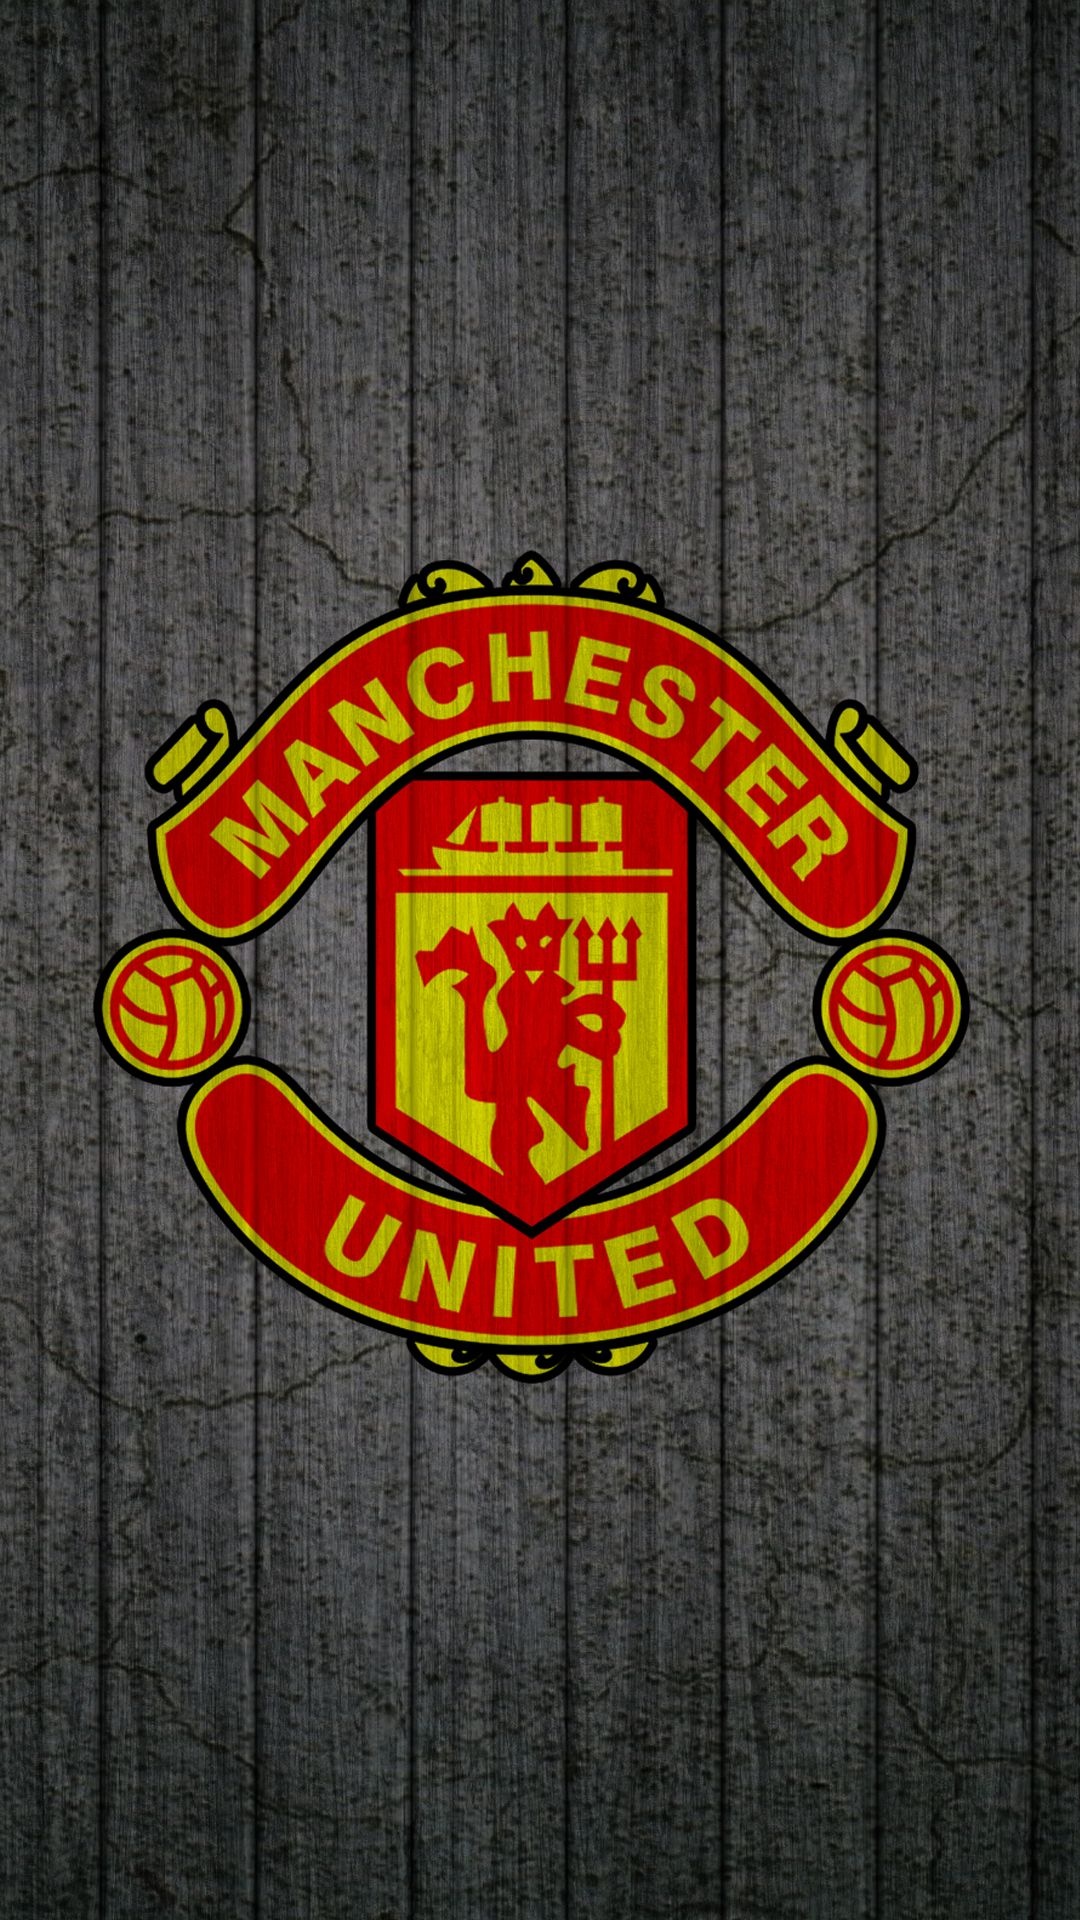 Manchester United, Striking iPhone wallpapers, Distinctive logo, Trendy design, 1080x1920 Full HD Phone